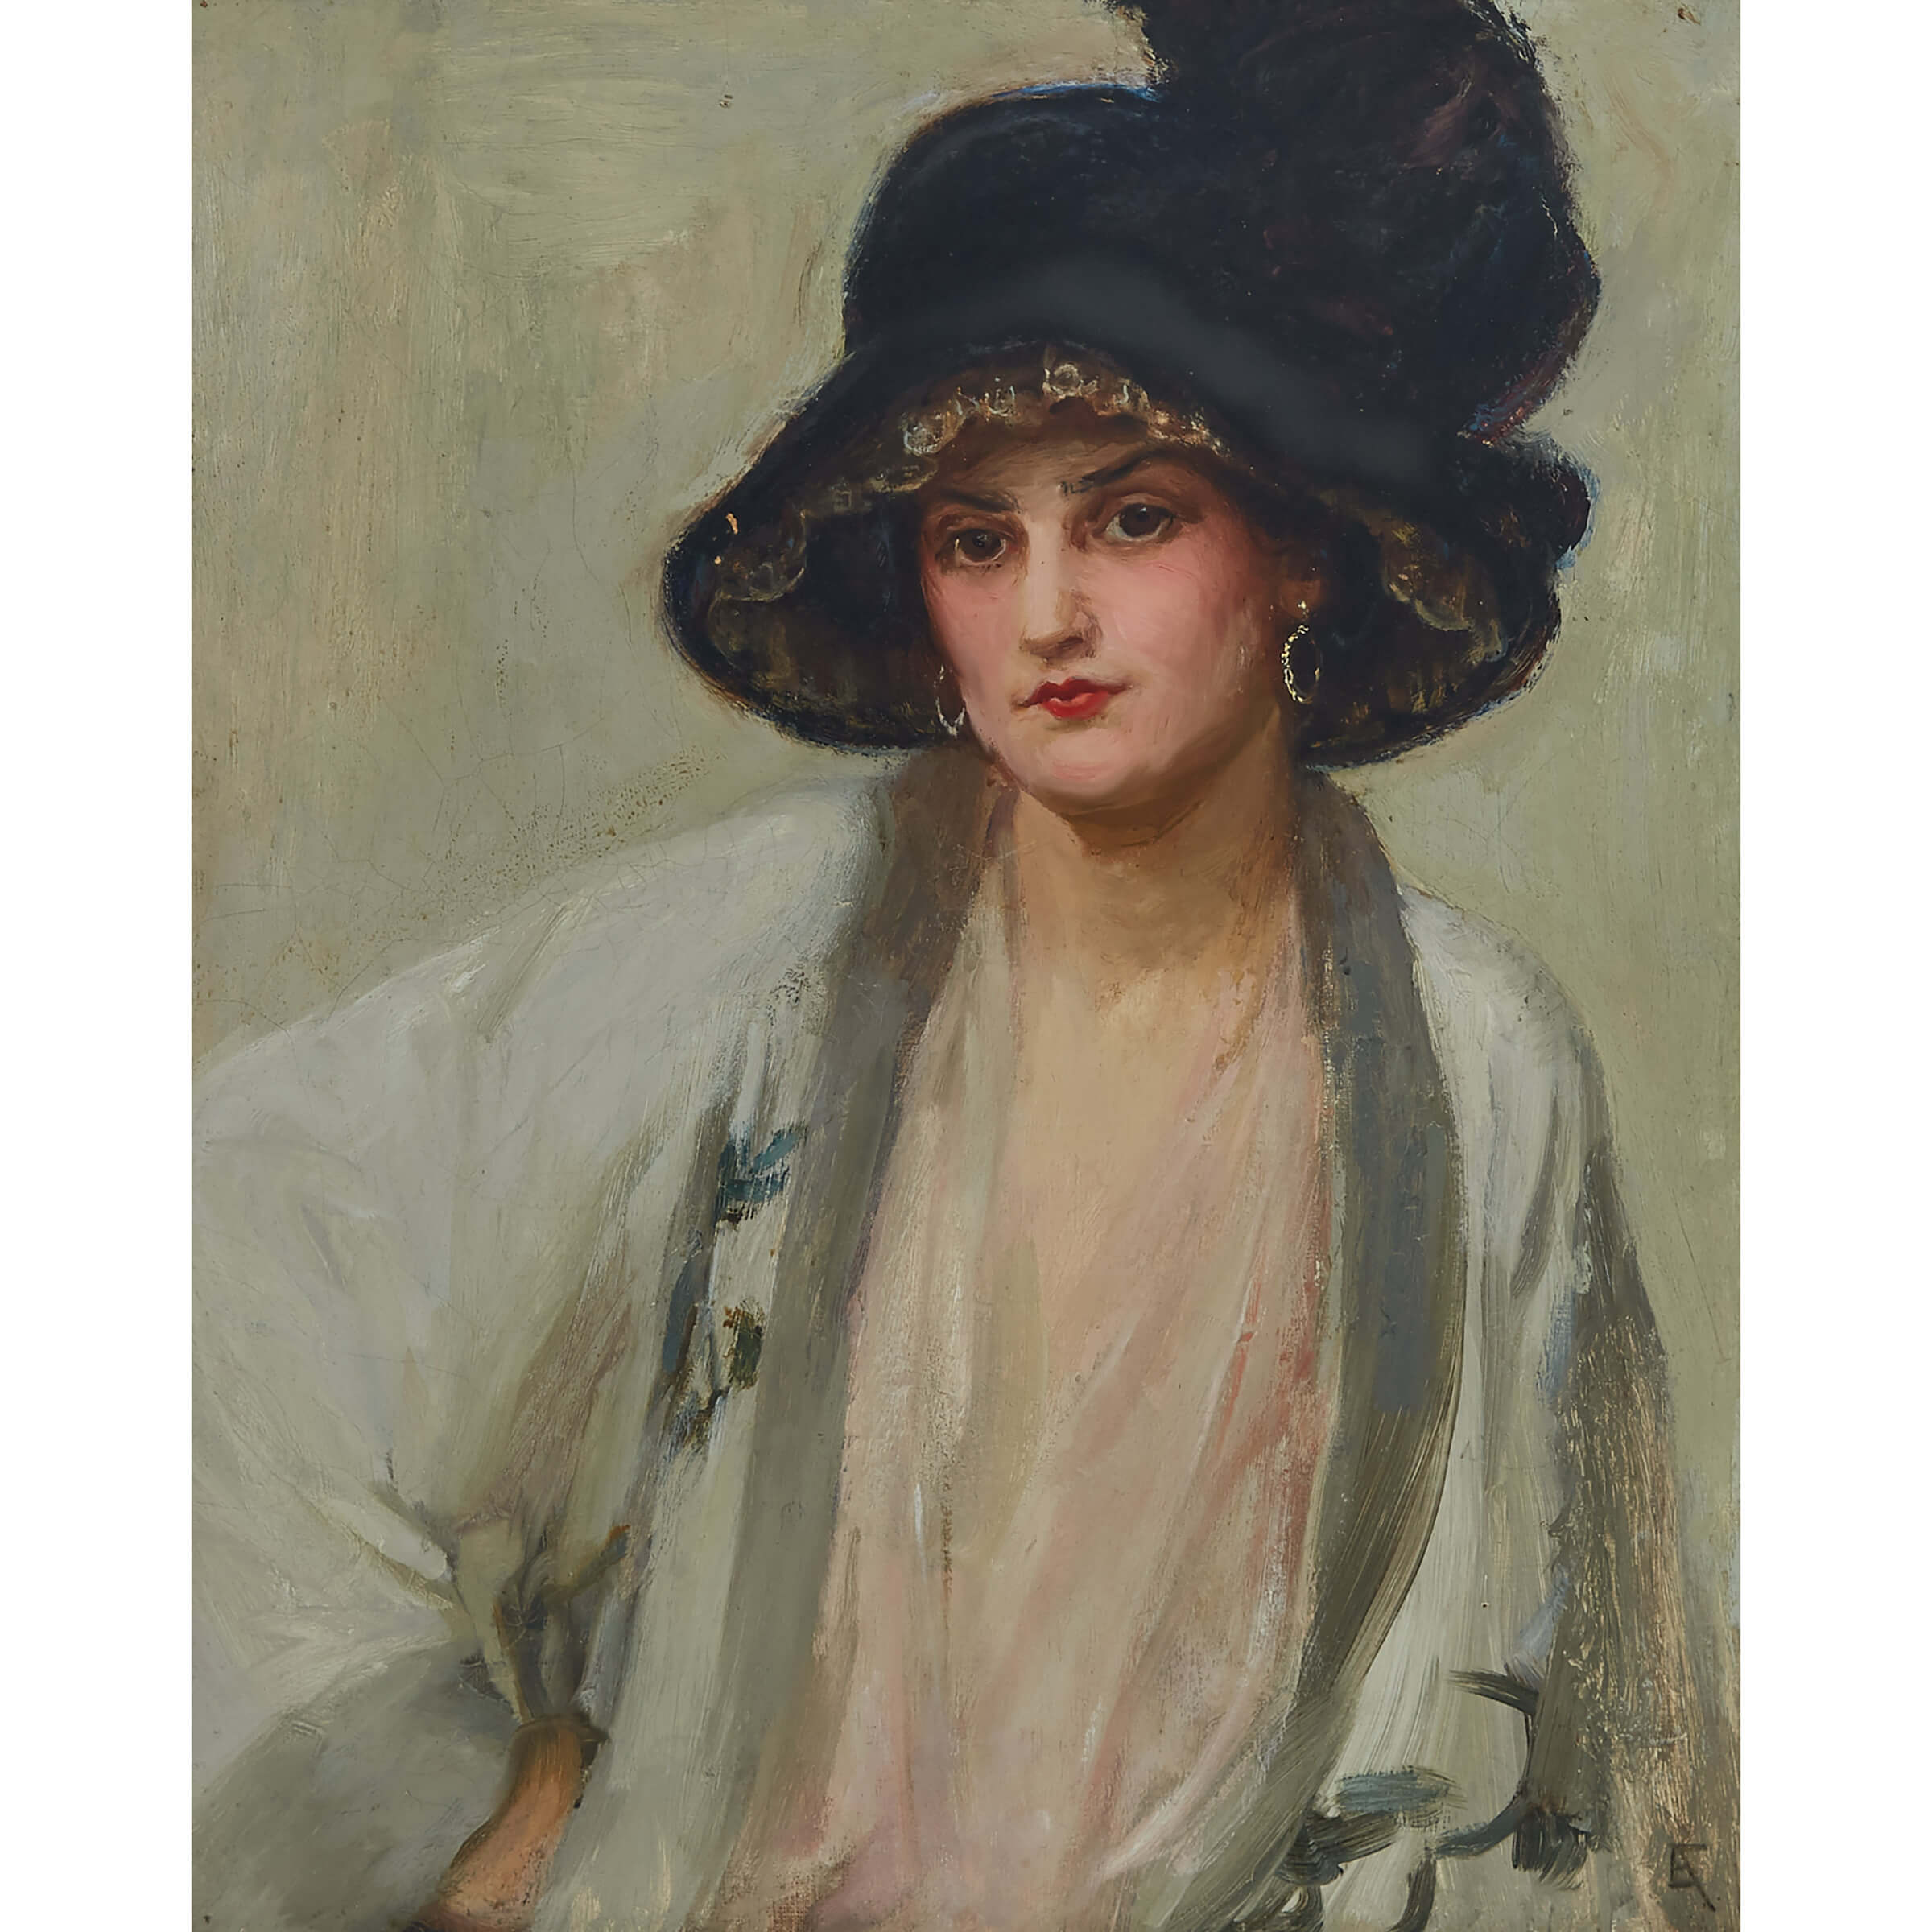 Elizabeth Adela Stanhope Forbes (1859-1912), Canadian/British